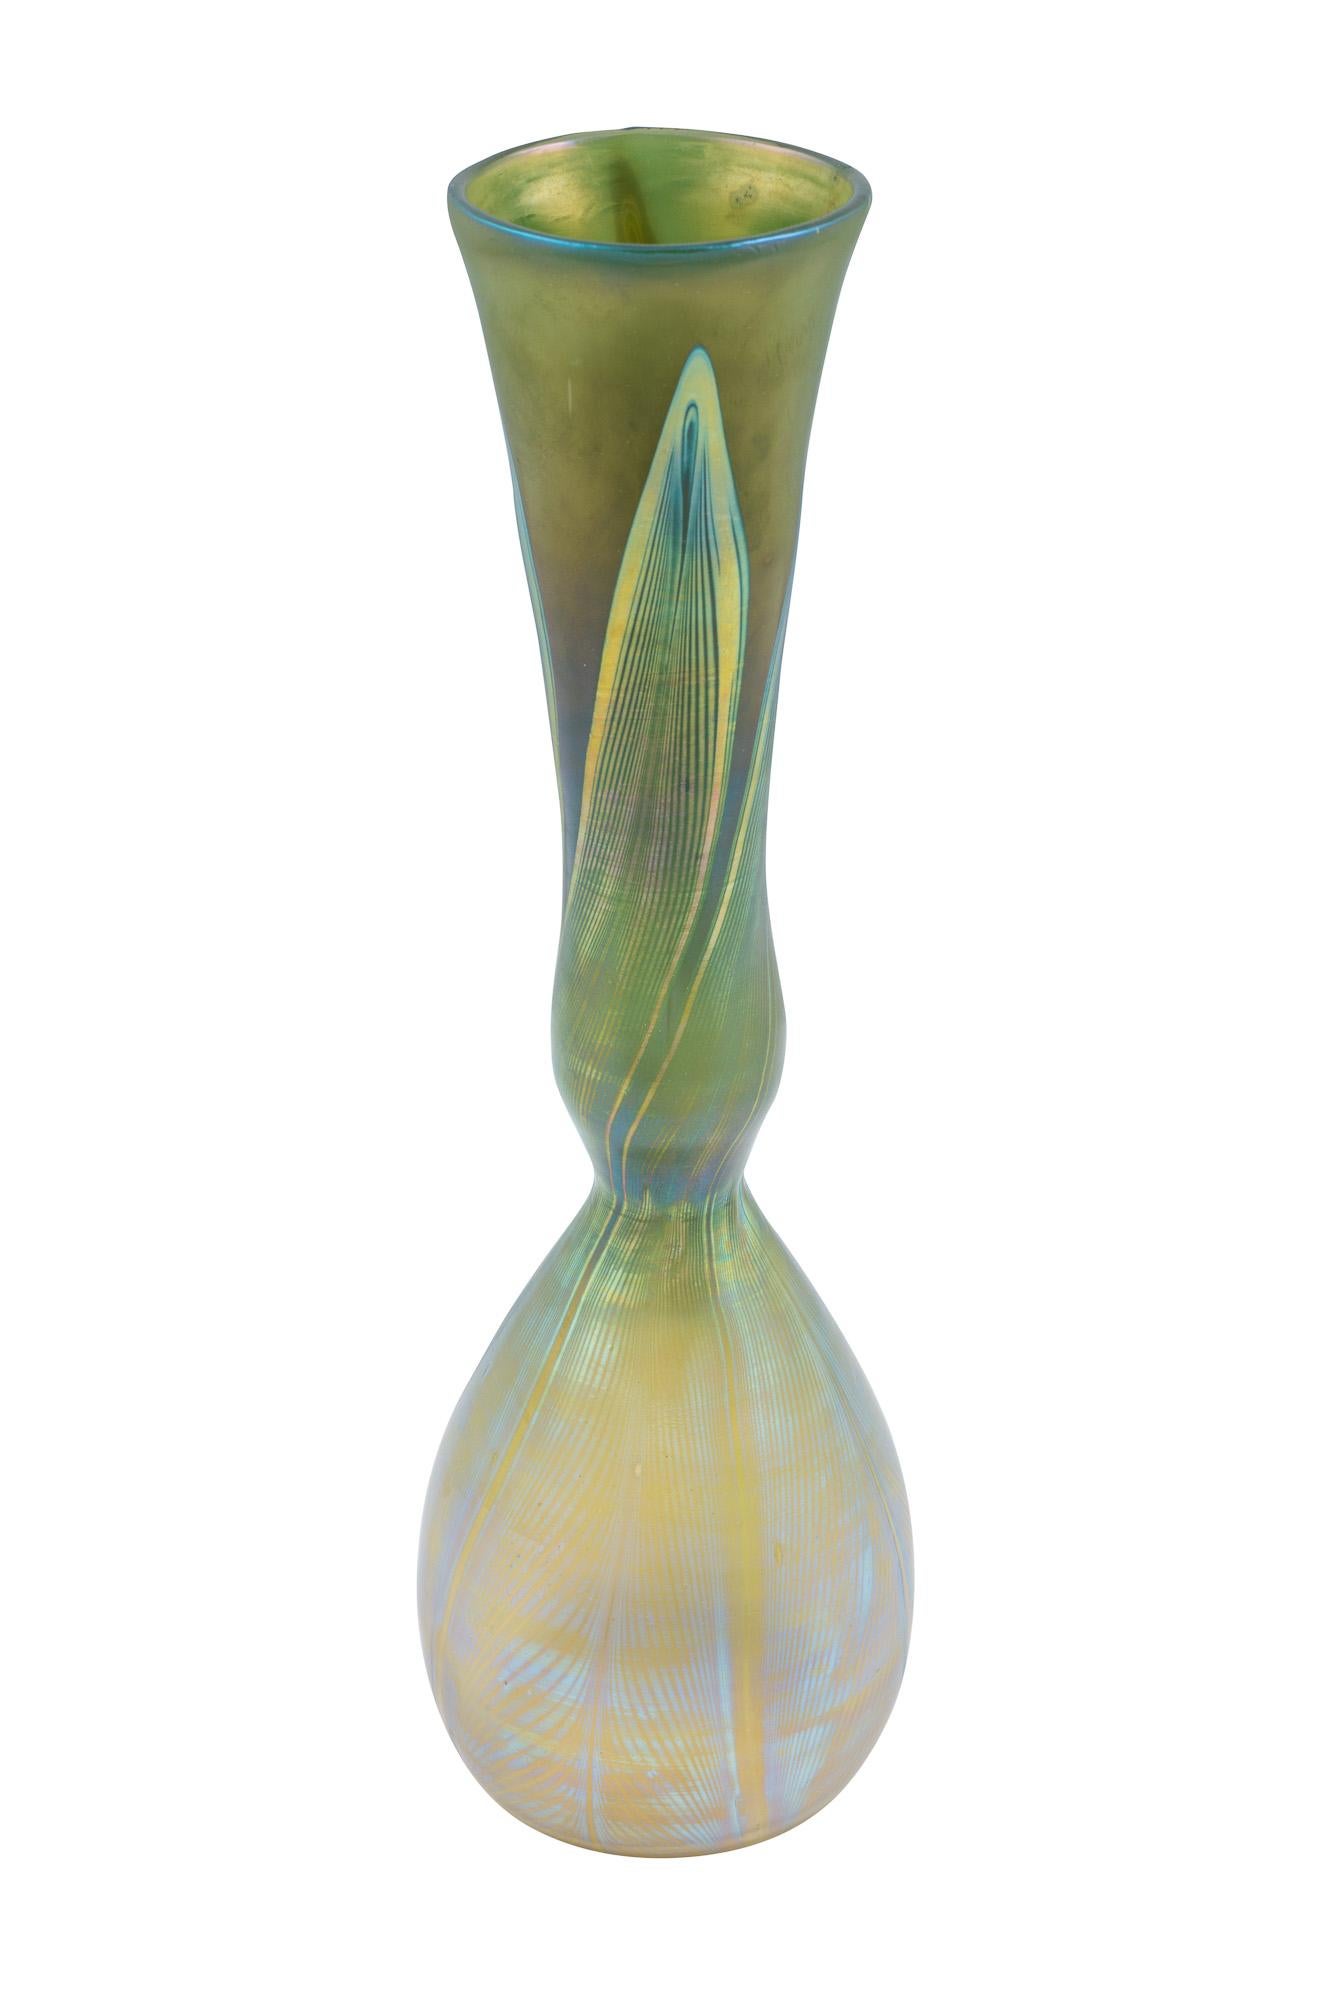 Austrian Early Signed Loetz Vase circa 1898 Phenomen Gre 166 Russian Green